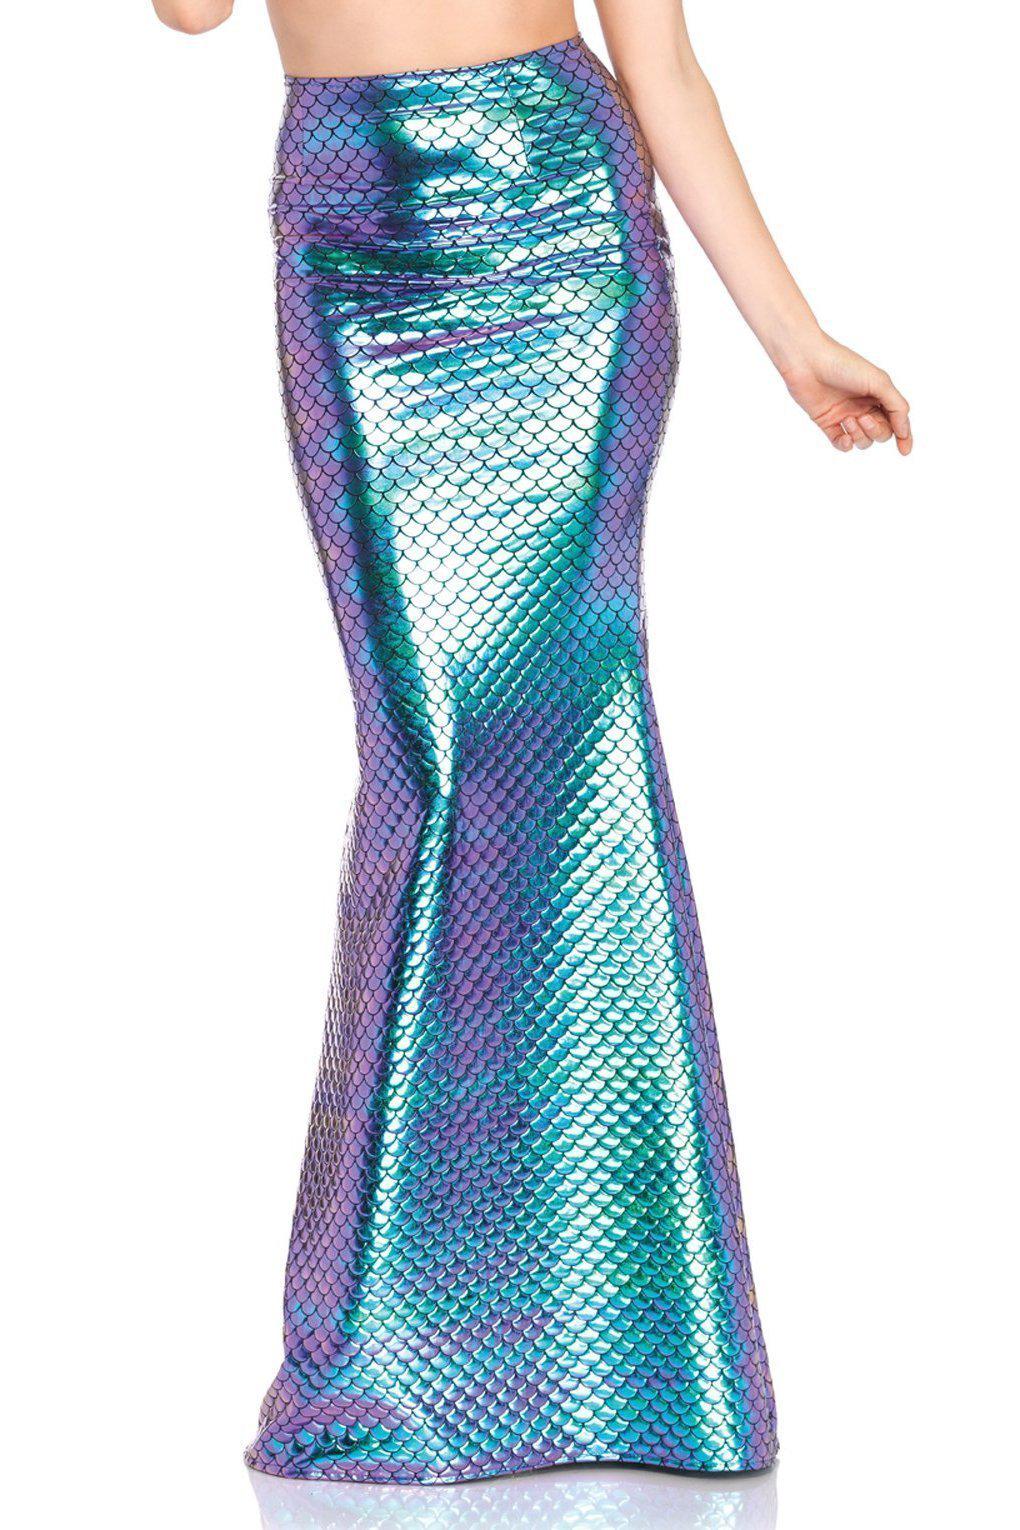 Iridescent Mermaid Skirt-Mermaid Costumes-Leg Avenue-SEXYSHOES.COM